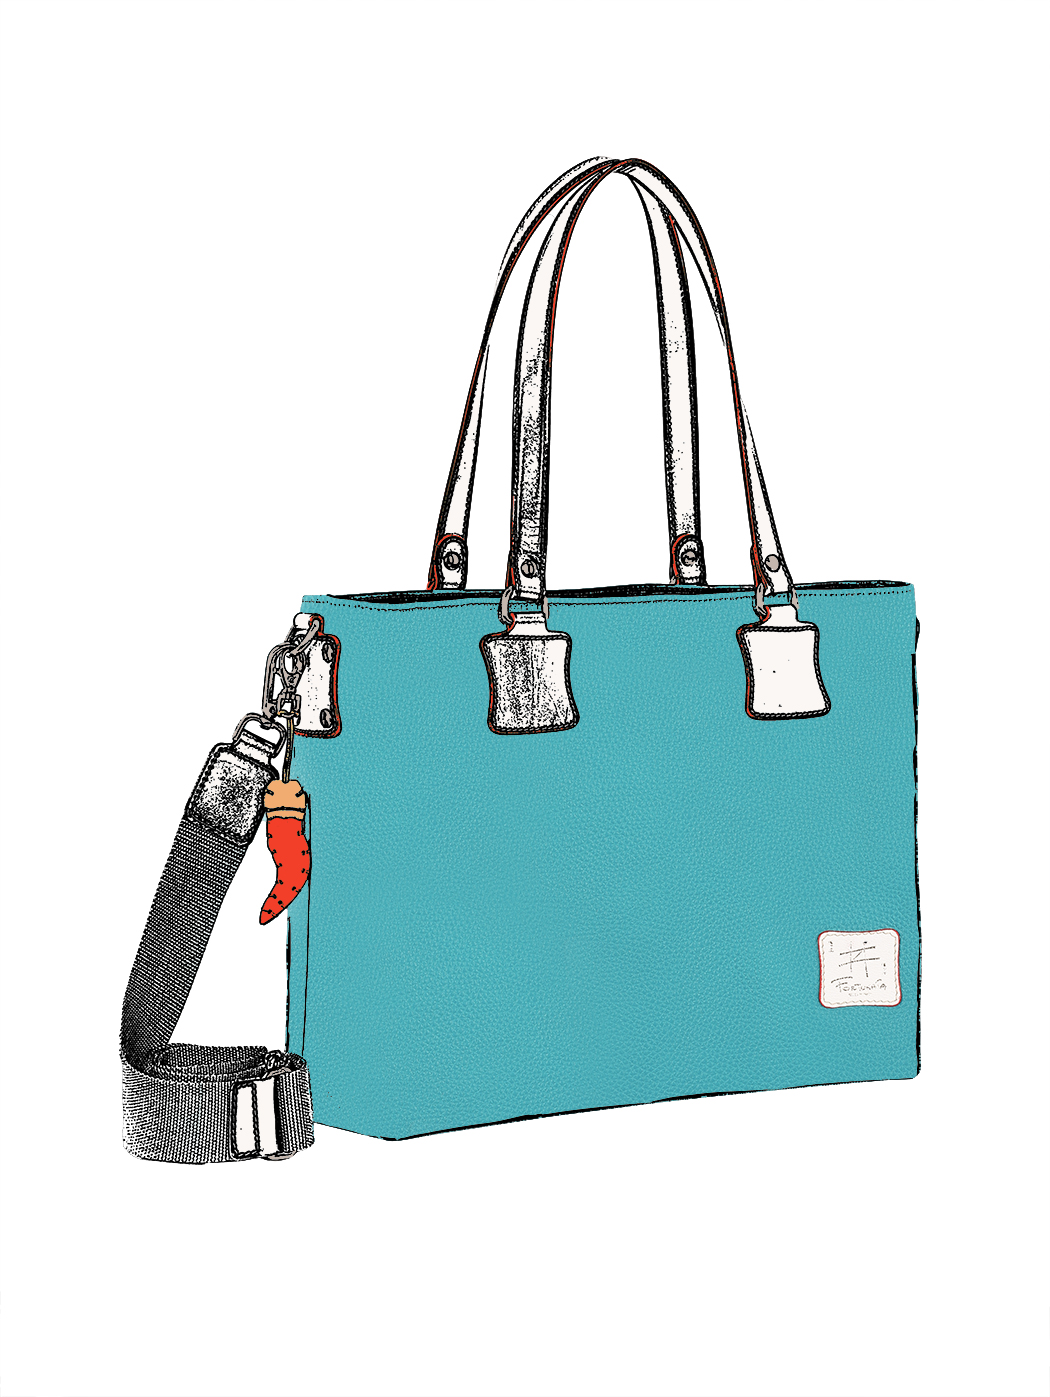 Coach Chelsea Light Blue Pebbled Leather Shoulder Bag Purse Handbag D05S  8A41 | eBay